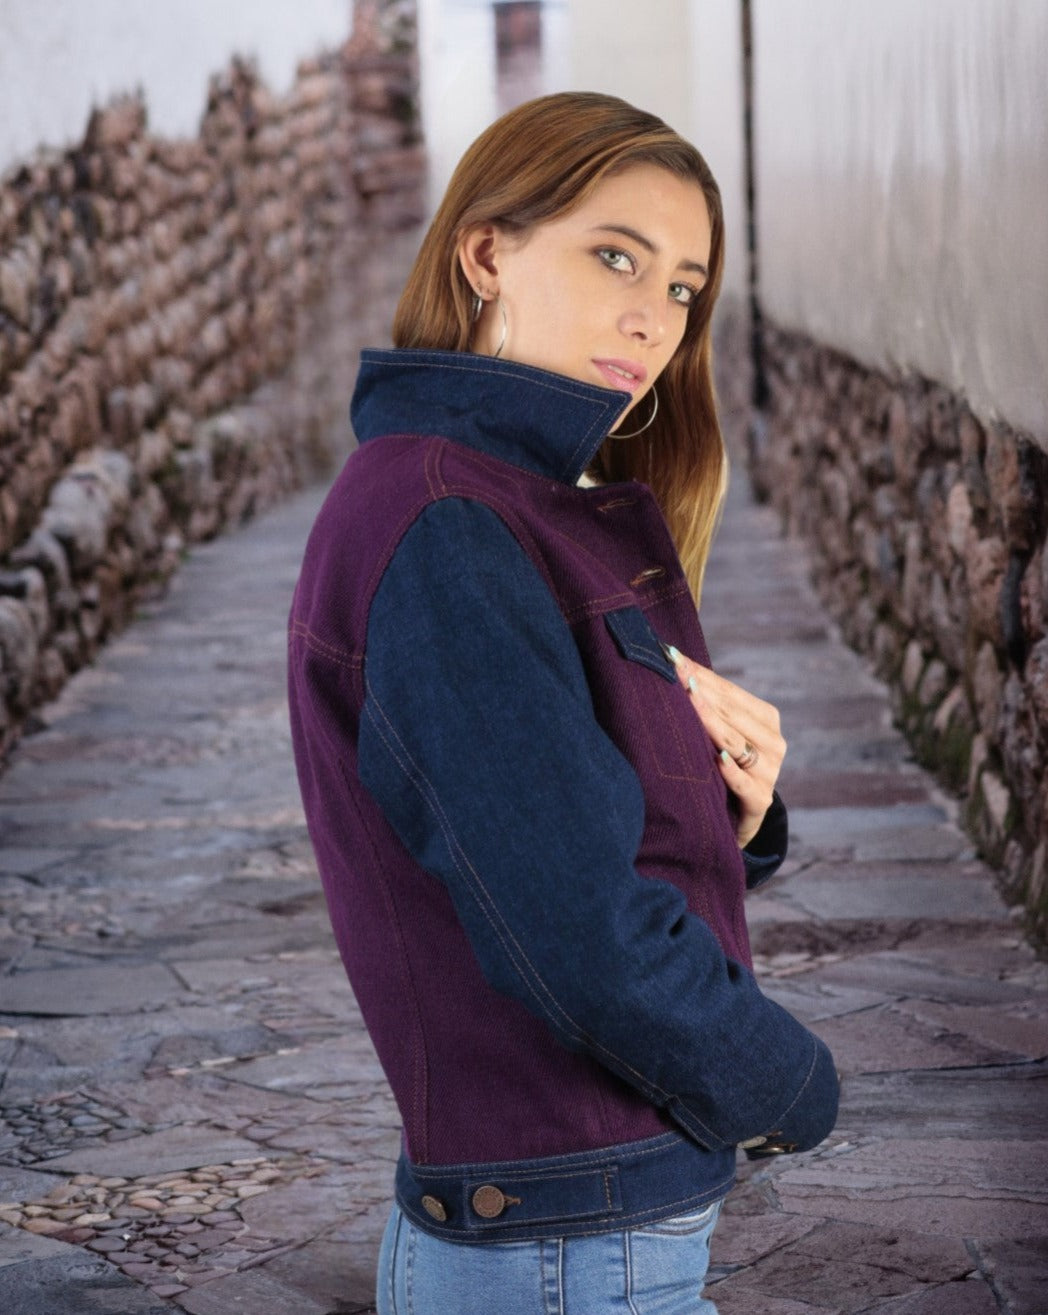 Denim jacket for women with elegant alpaca fabric application.